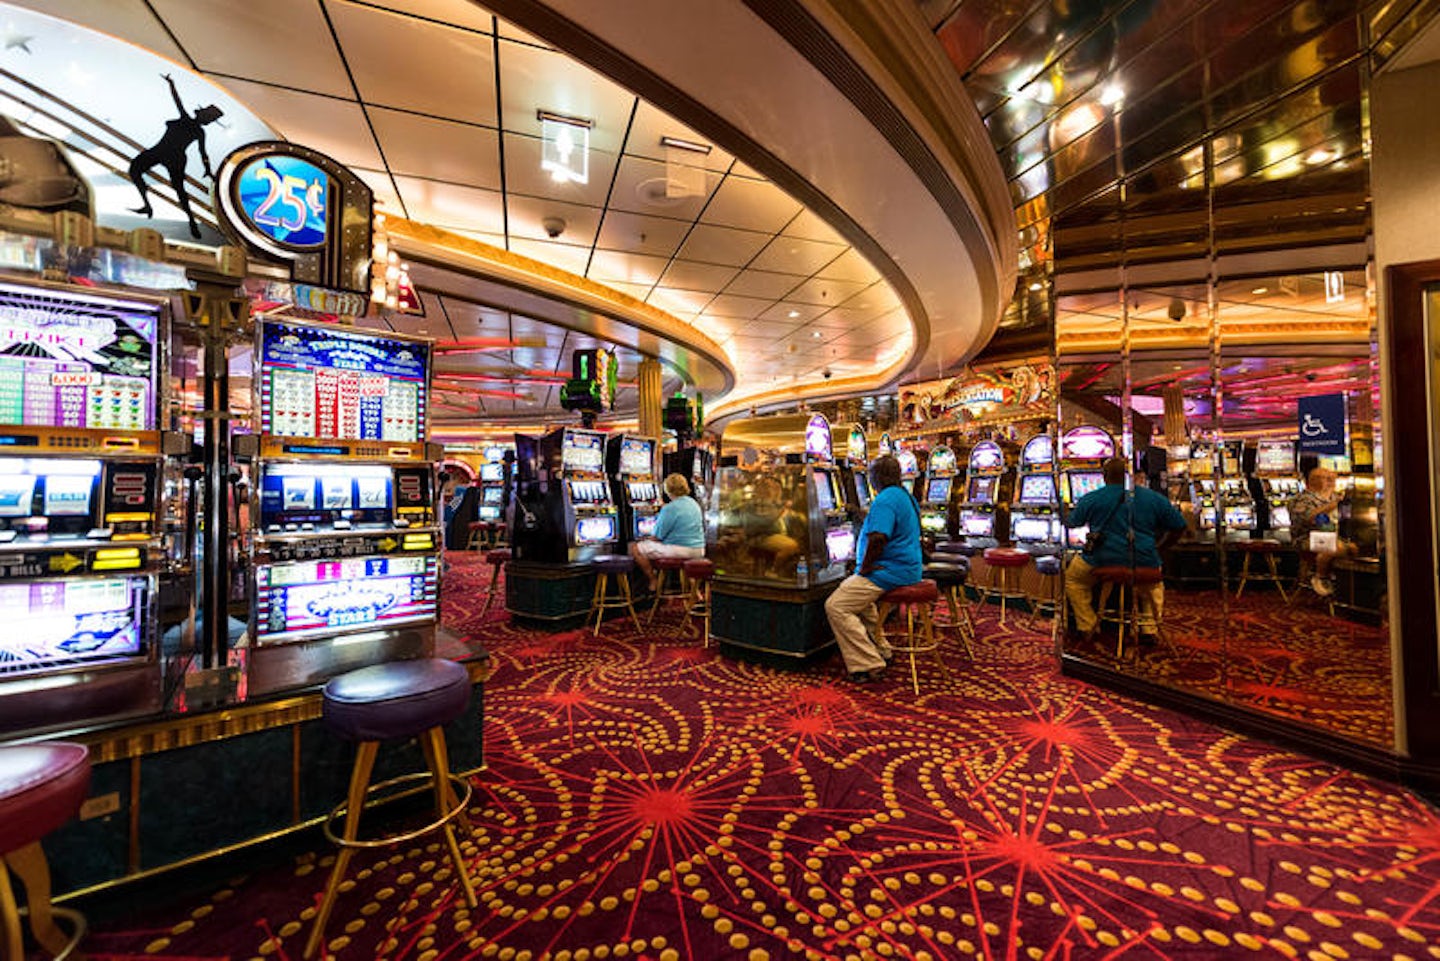 Casino Royale on Royal Caribbean Adventure of the Seas Cruise Ship